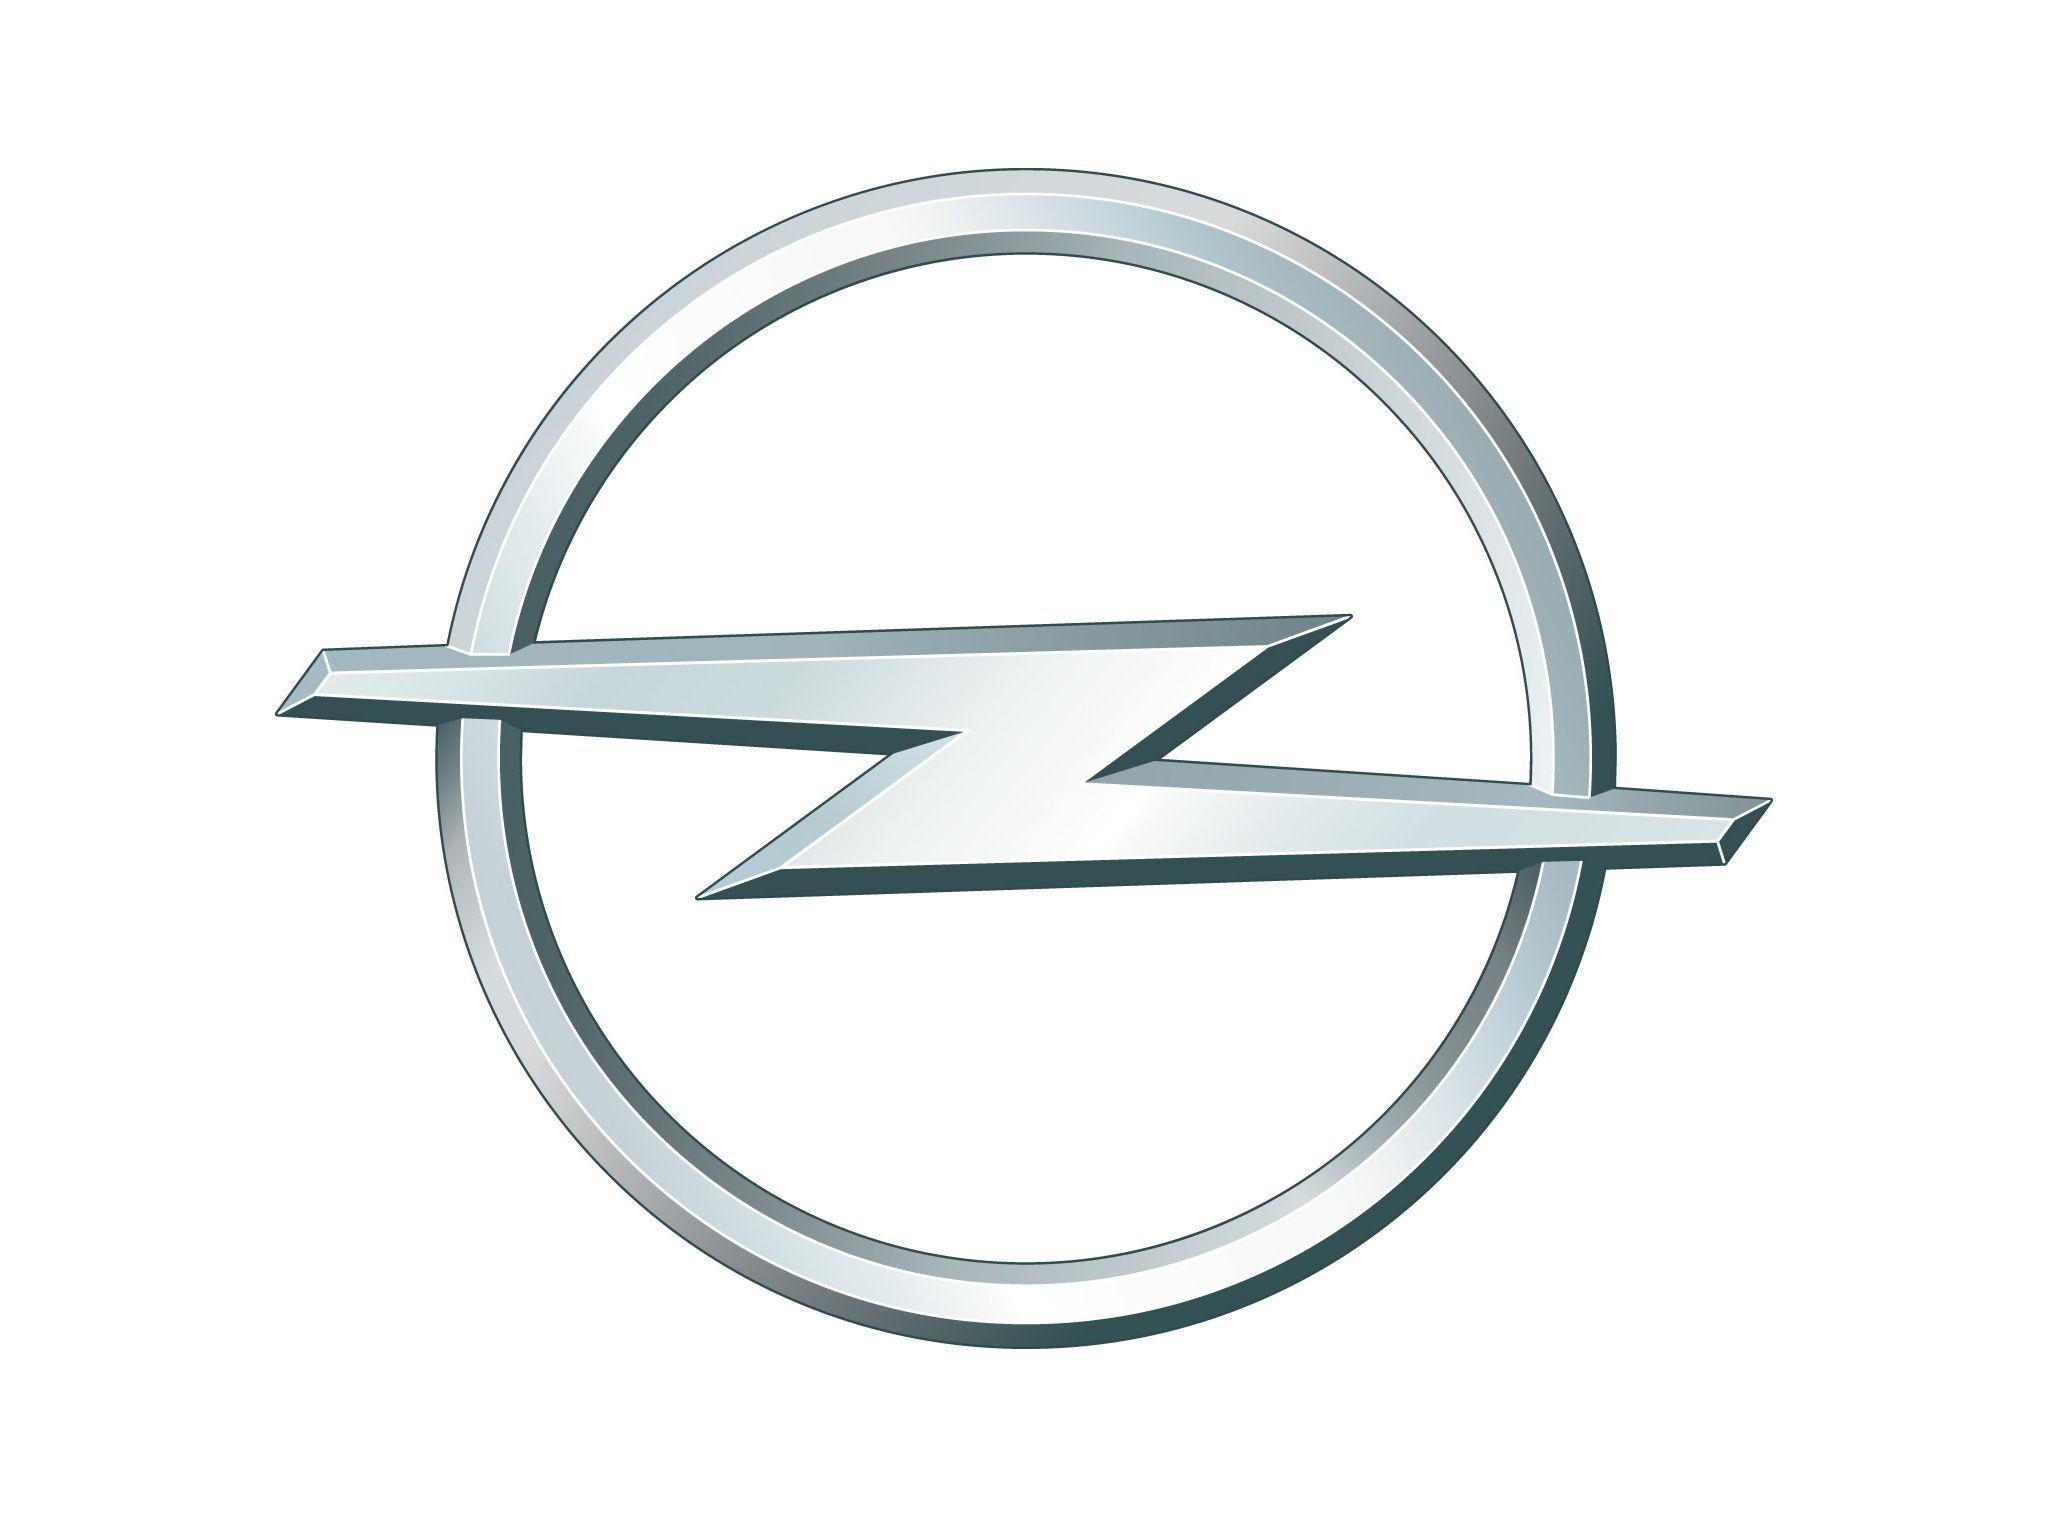 Lightning Bolt through Circle Logo - Opel Logo, Opel Car Symbol and History | Car Brand Names.com